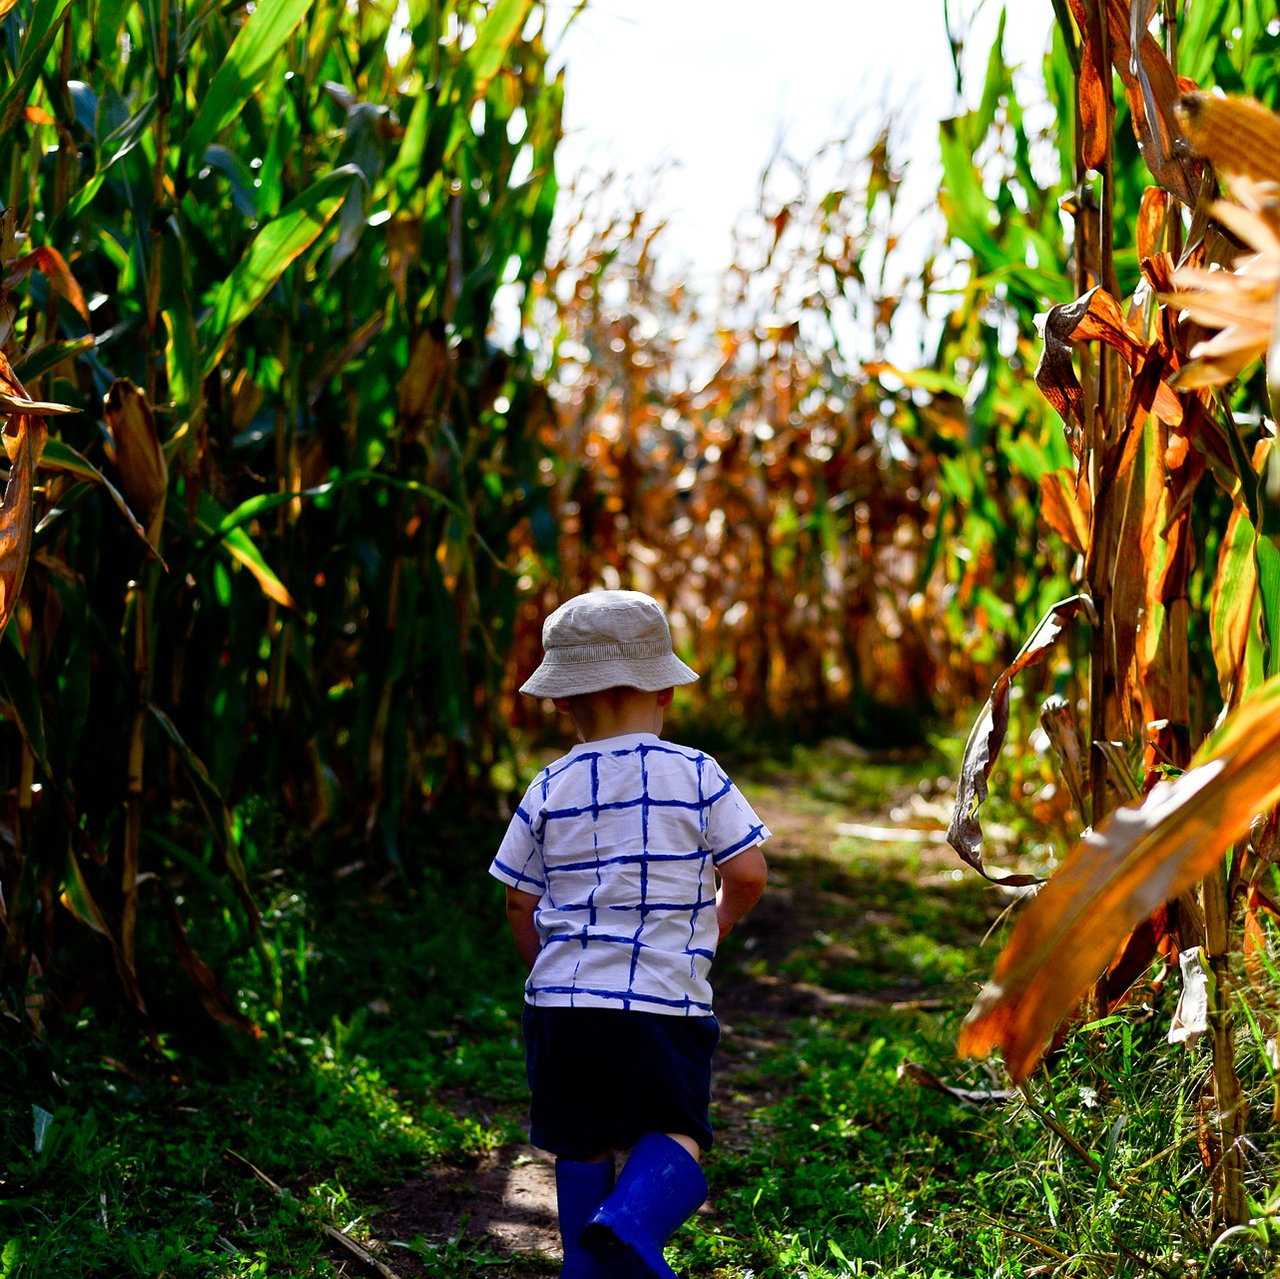 Child walking through path in corn field.